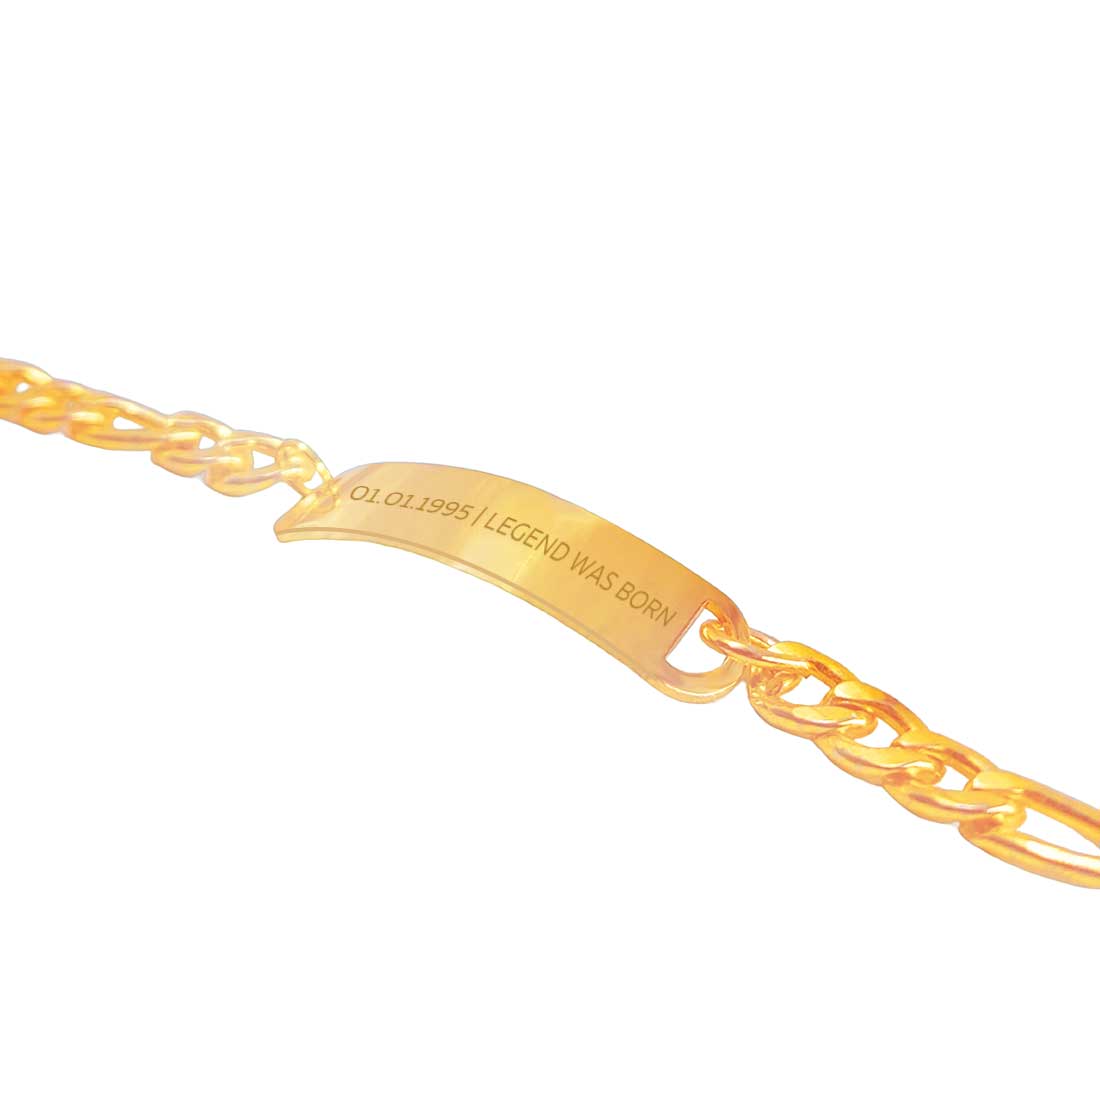 Personalized Bracelet for Men Stylist Custom Jewellery - Black Rhodium/Gold Plated - Add Date